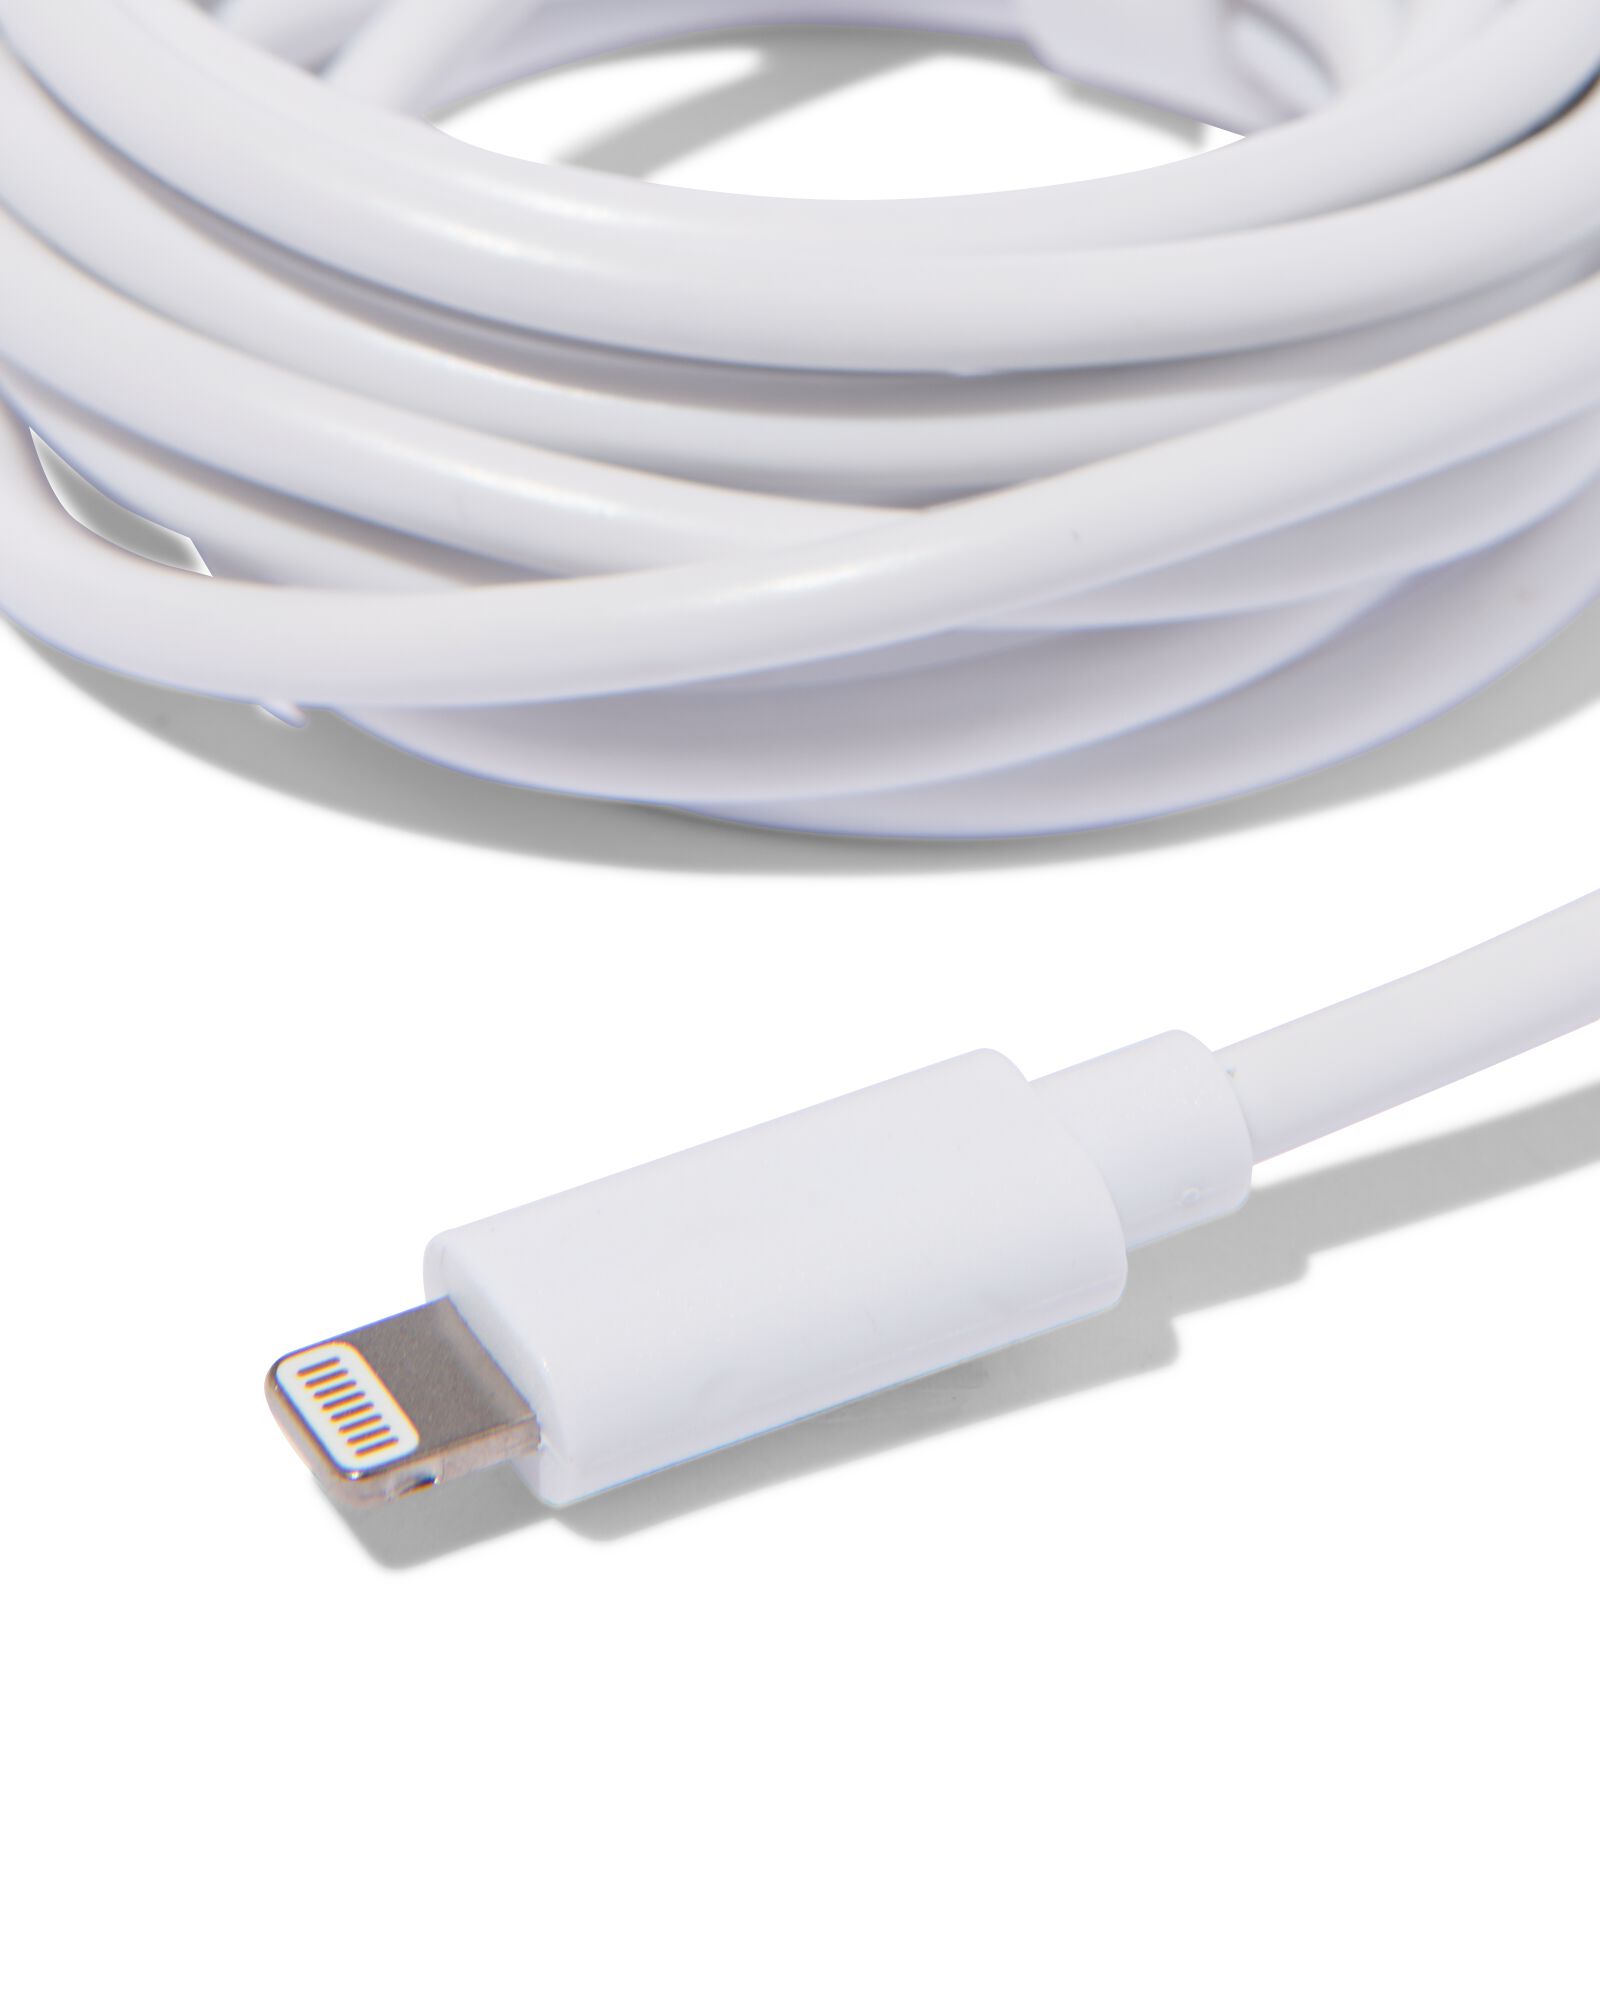 câble chargeur USB 4-en-1, USB-C, micro USB et 8 broches. - HEMA